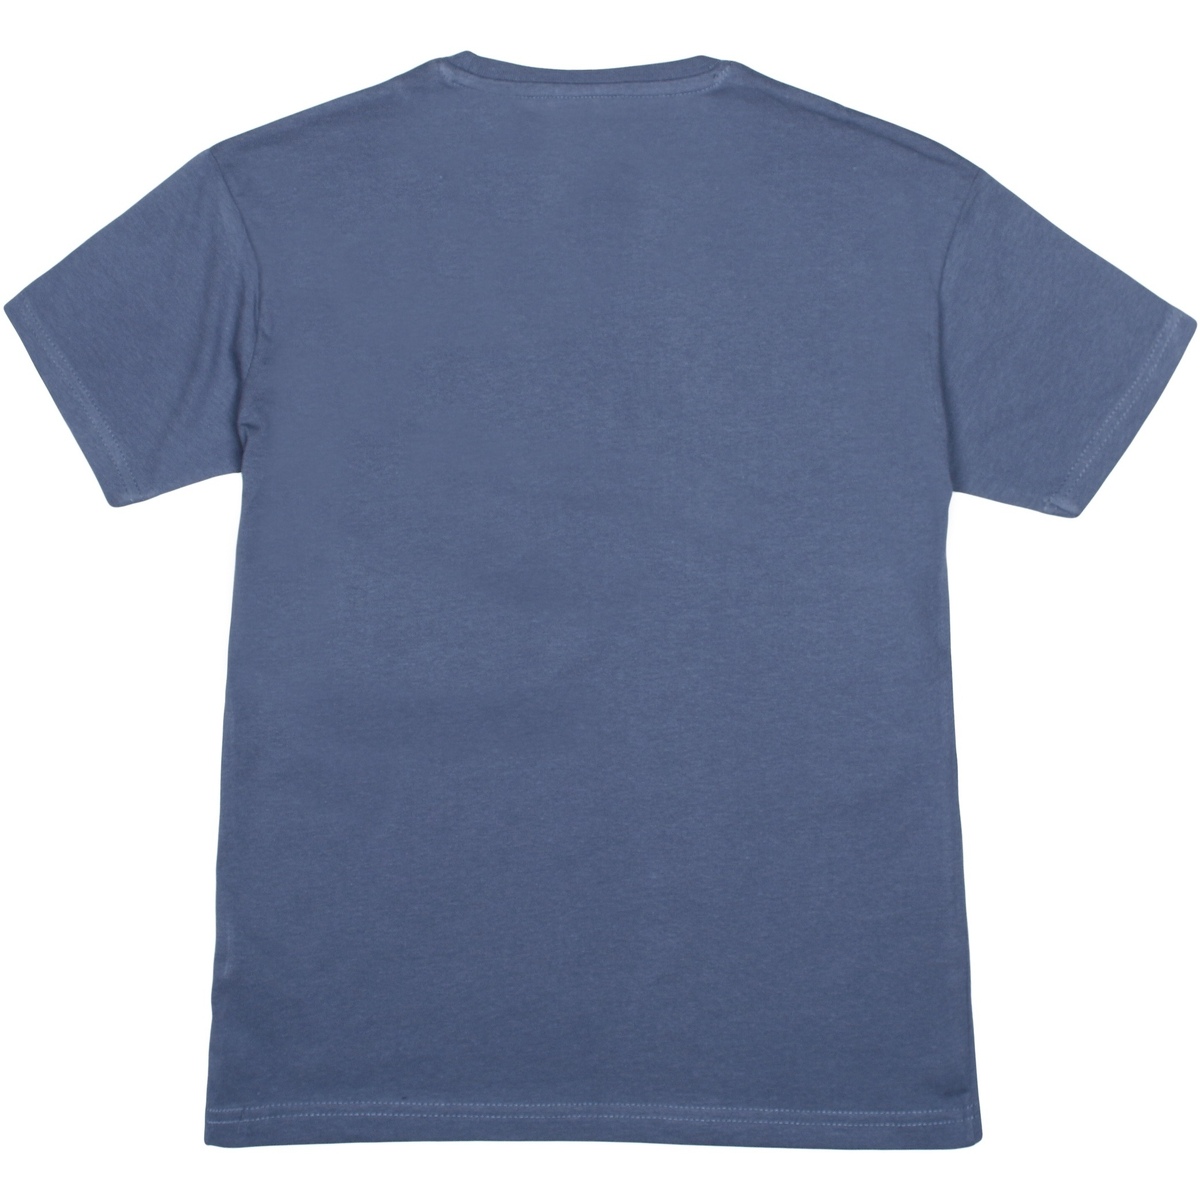 Kaporal Bleu Tee Shirt Garçon manches courtes BUktLfvN